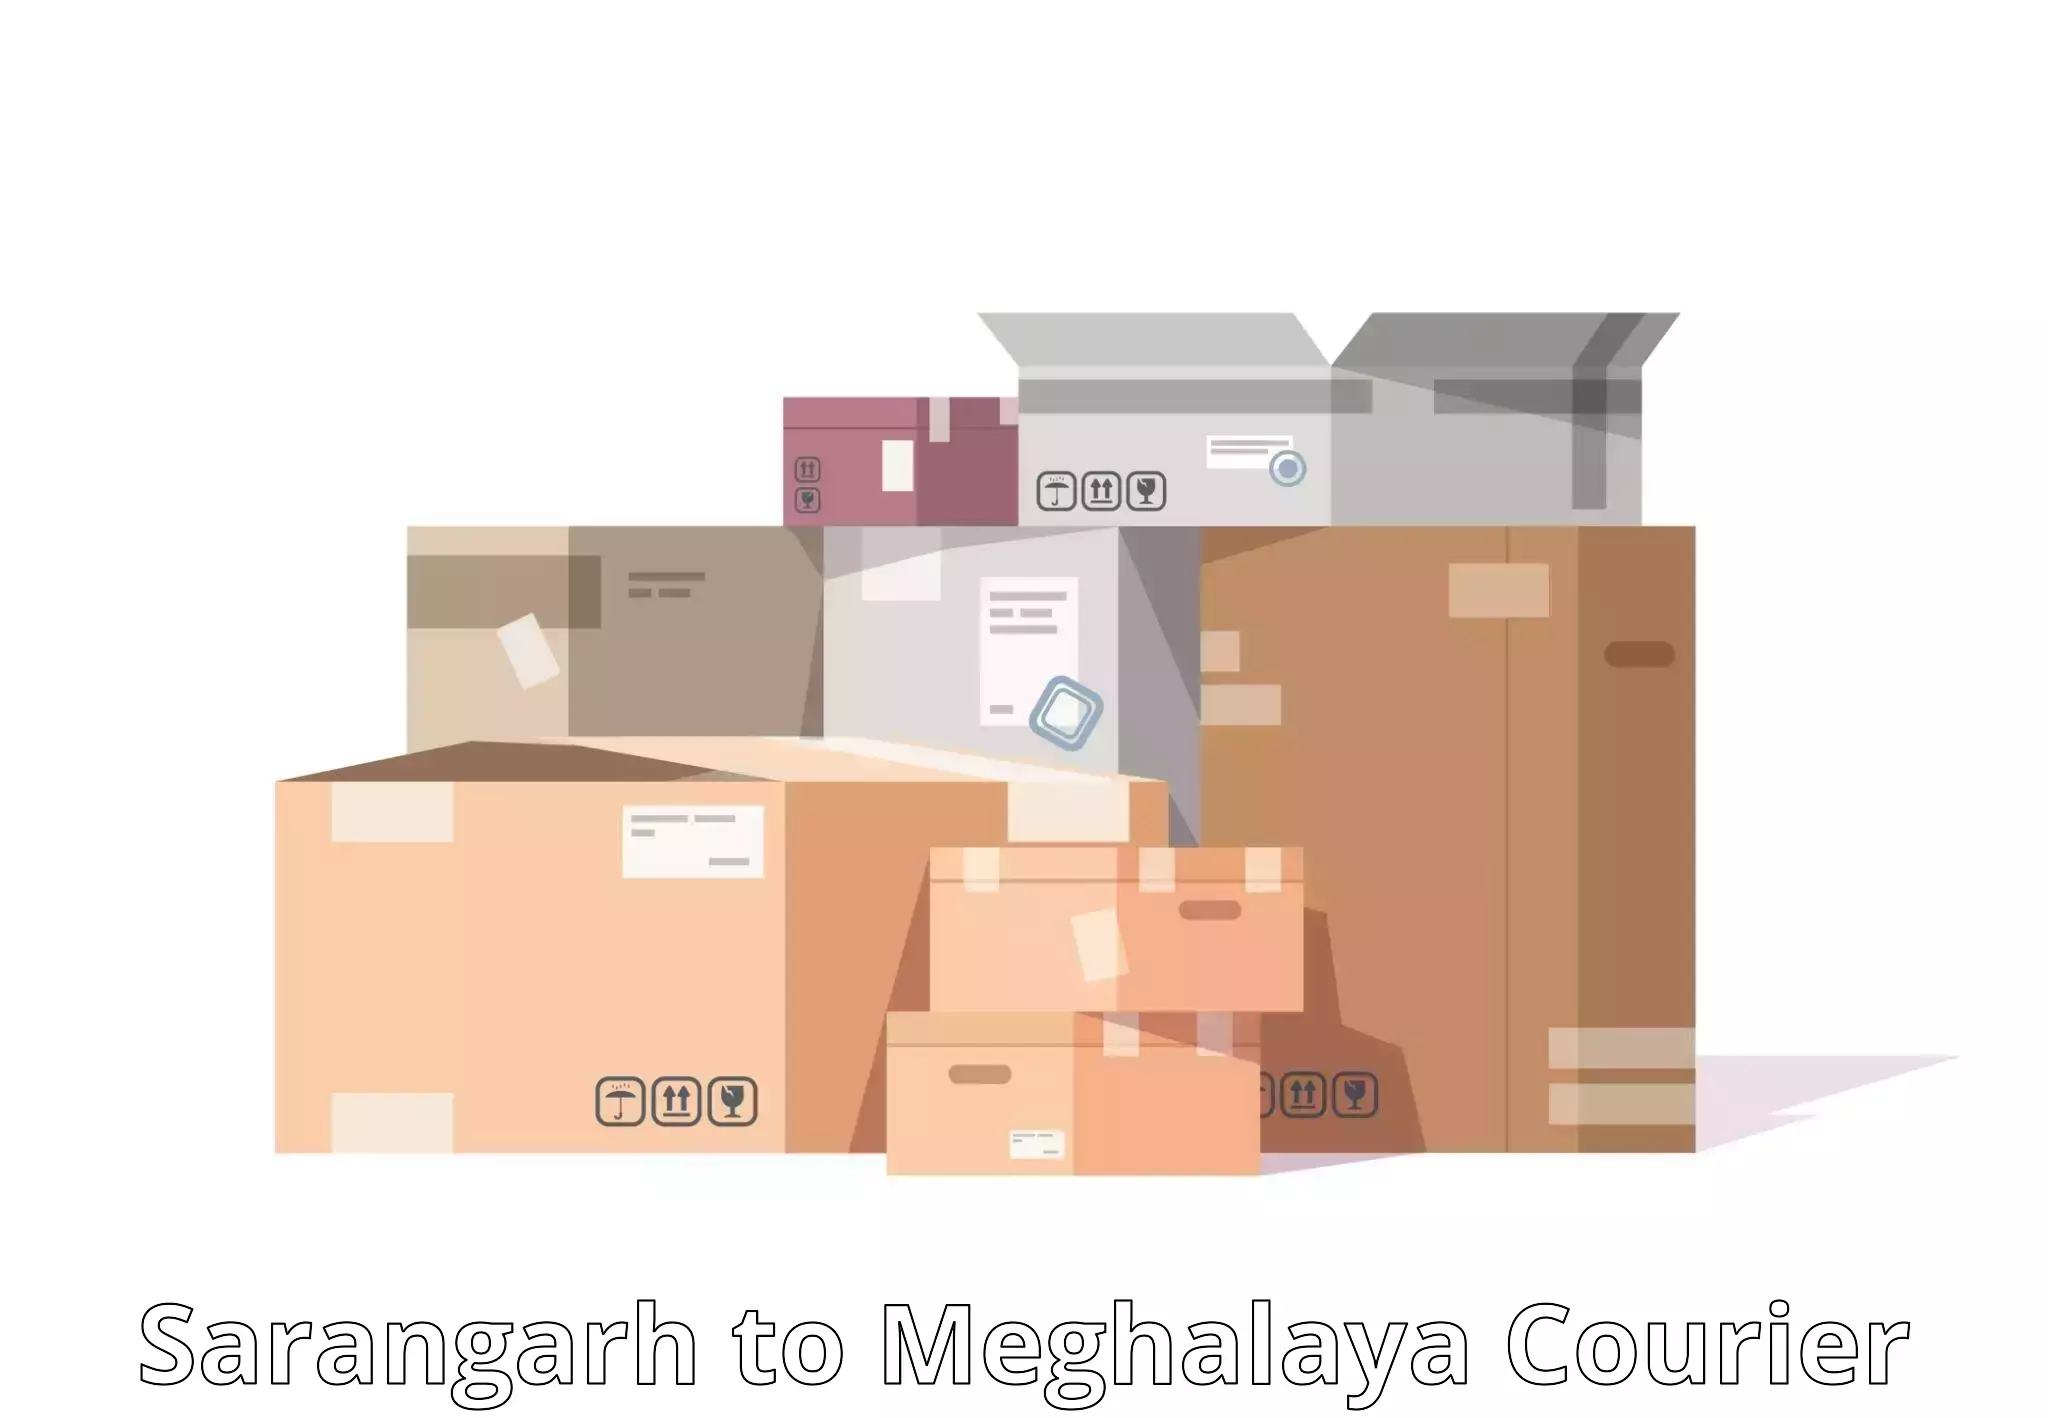 Personalized courier experiences Sarangarh to Meghalaya